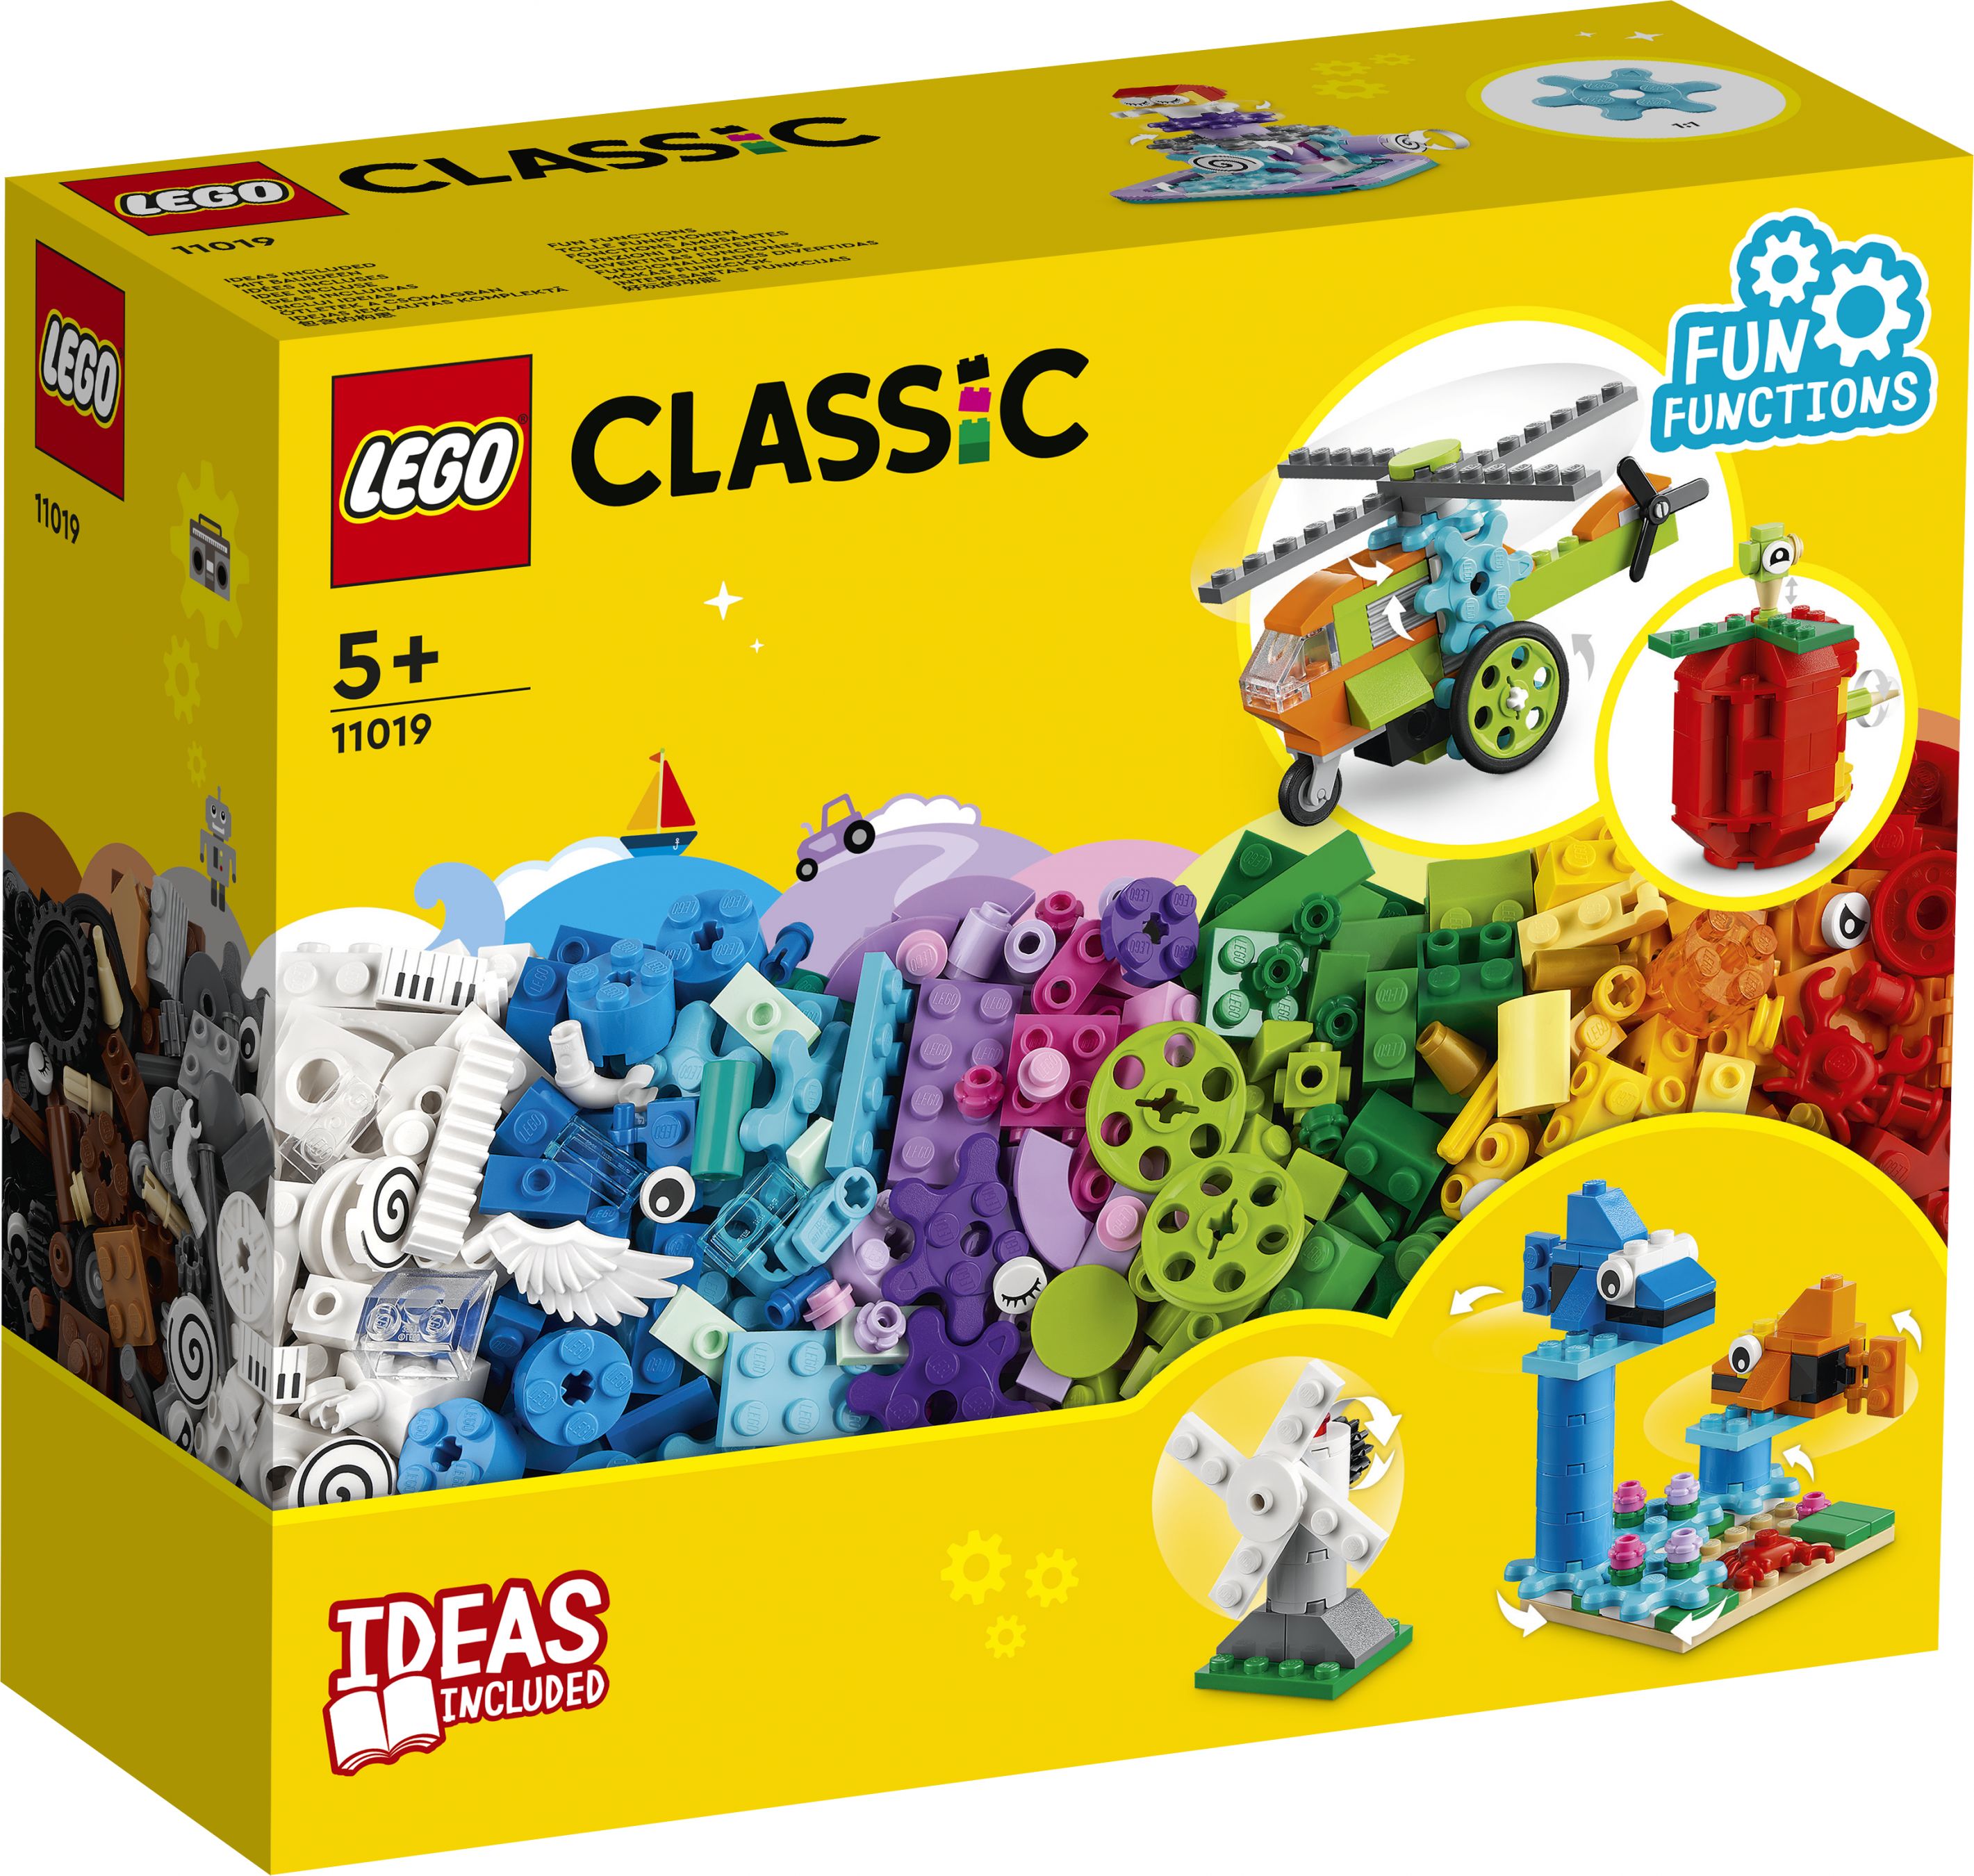 LEGO Classic 11019 Bausteine und Funktionen LEGO_11019_Box1_v29.jpg